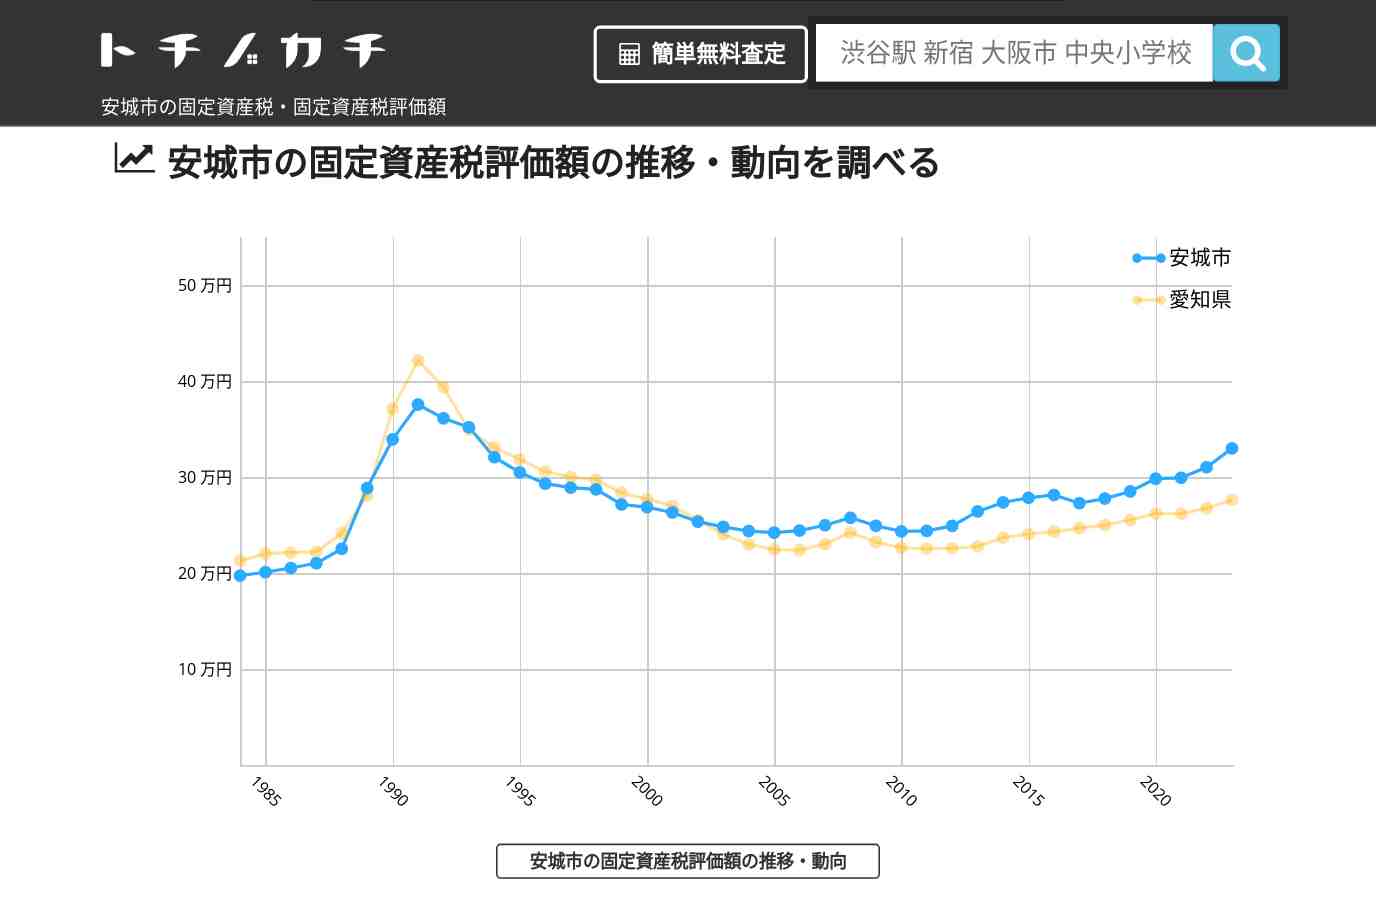 二本木小学校(愛知県 安城市)周辺の固定資産税・固定資産税評価額 | トチノカチ